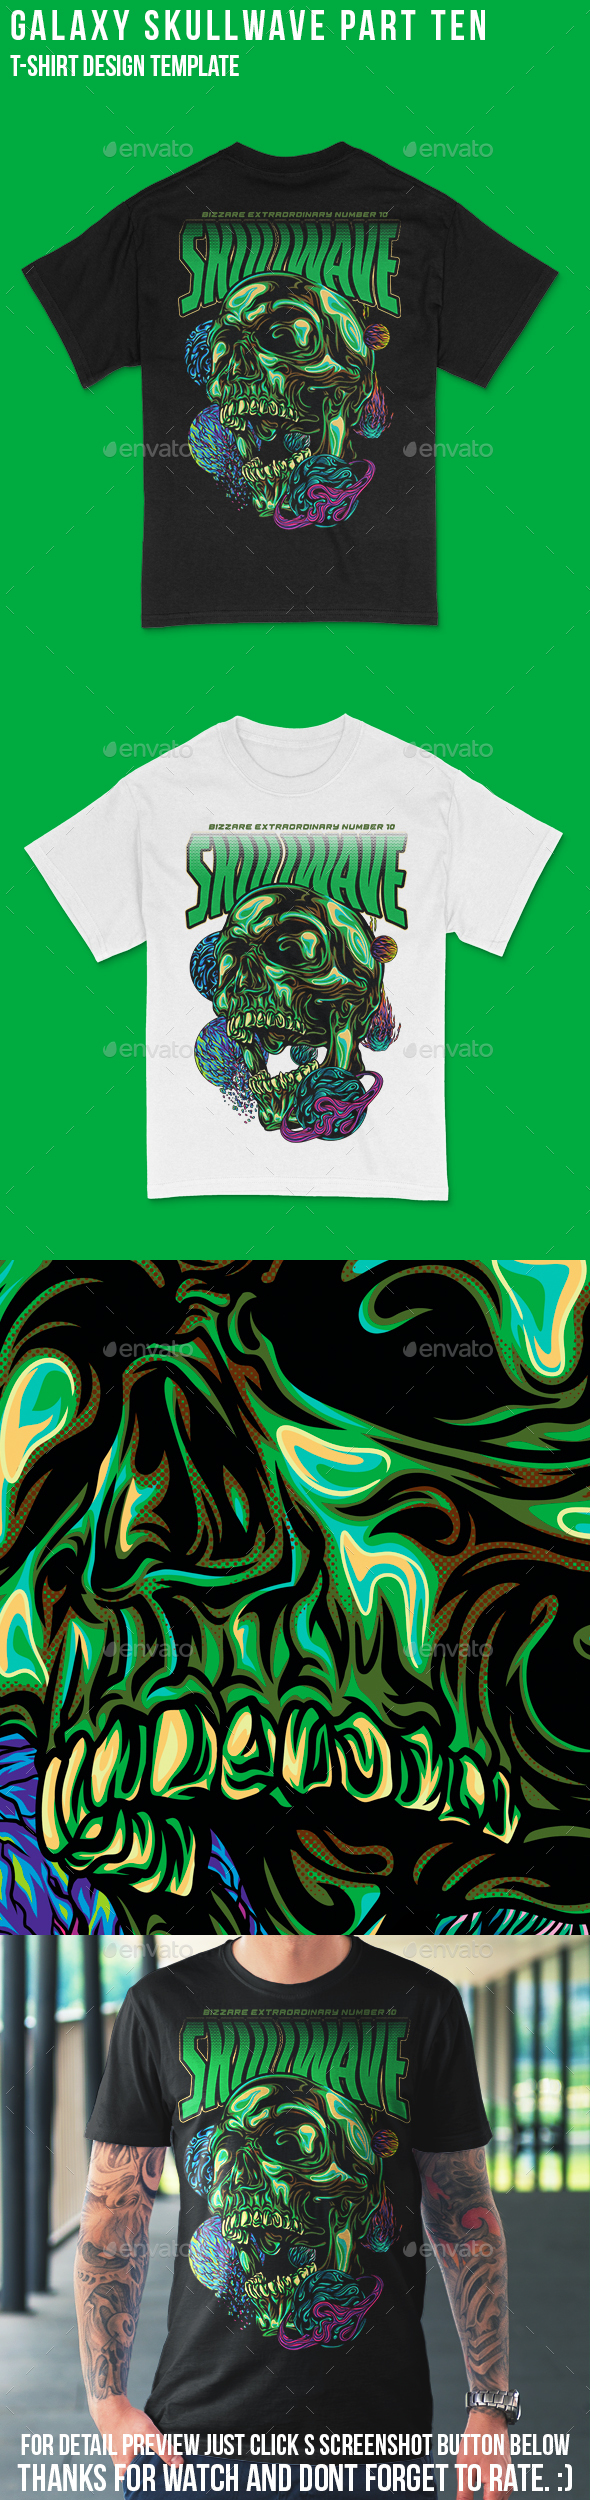 [DOWNLOAD]Skullwave in Space part 10 T-Shirt Design Template